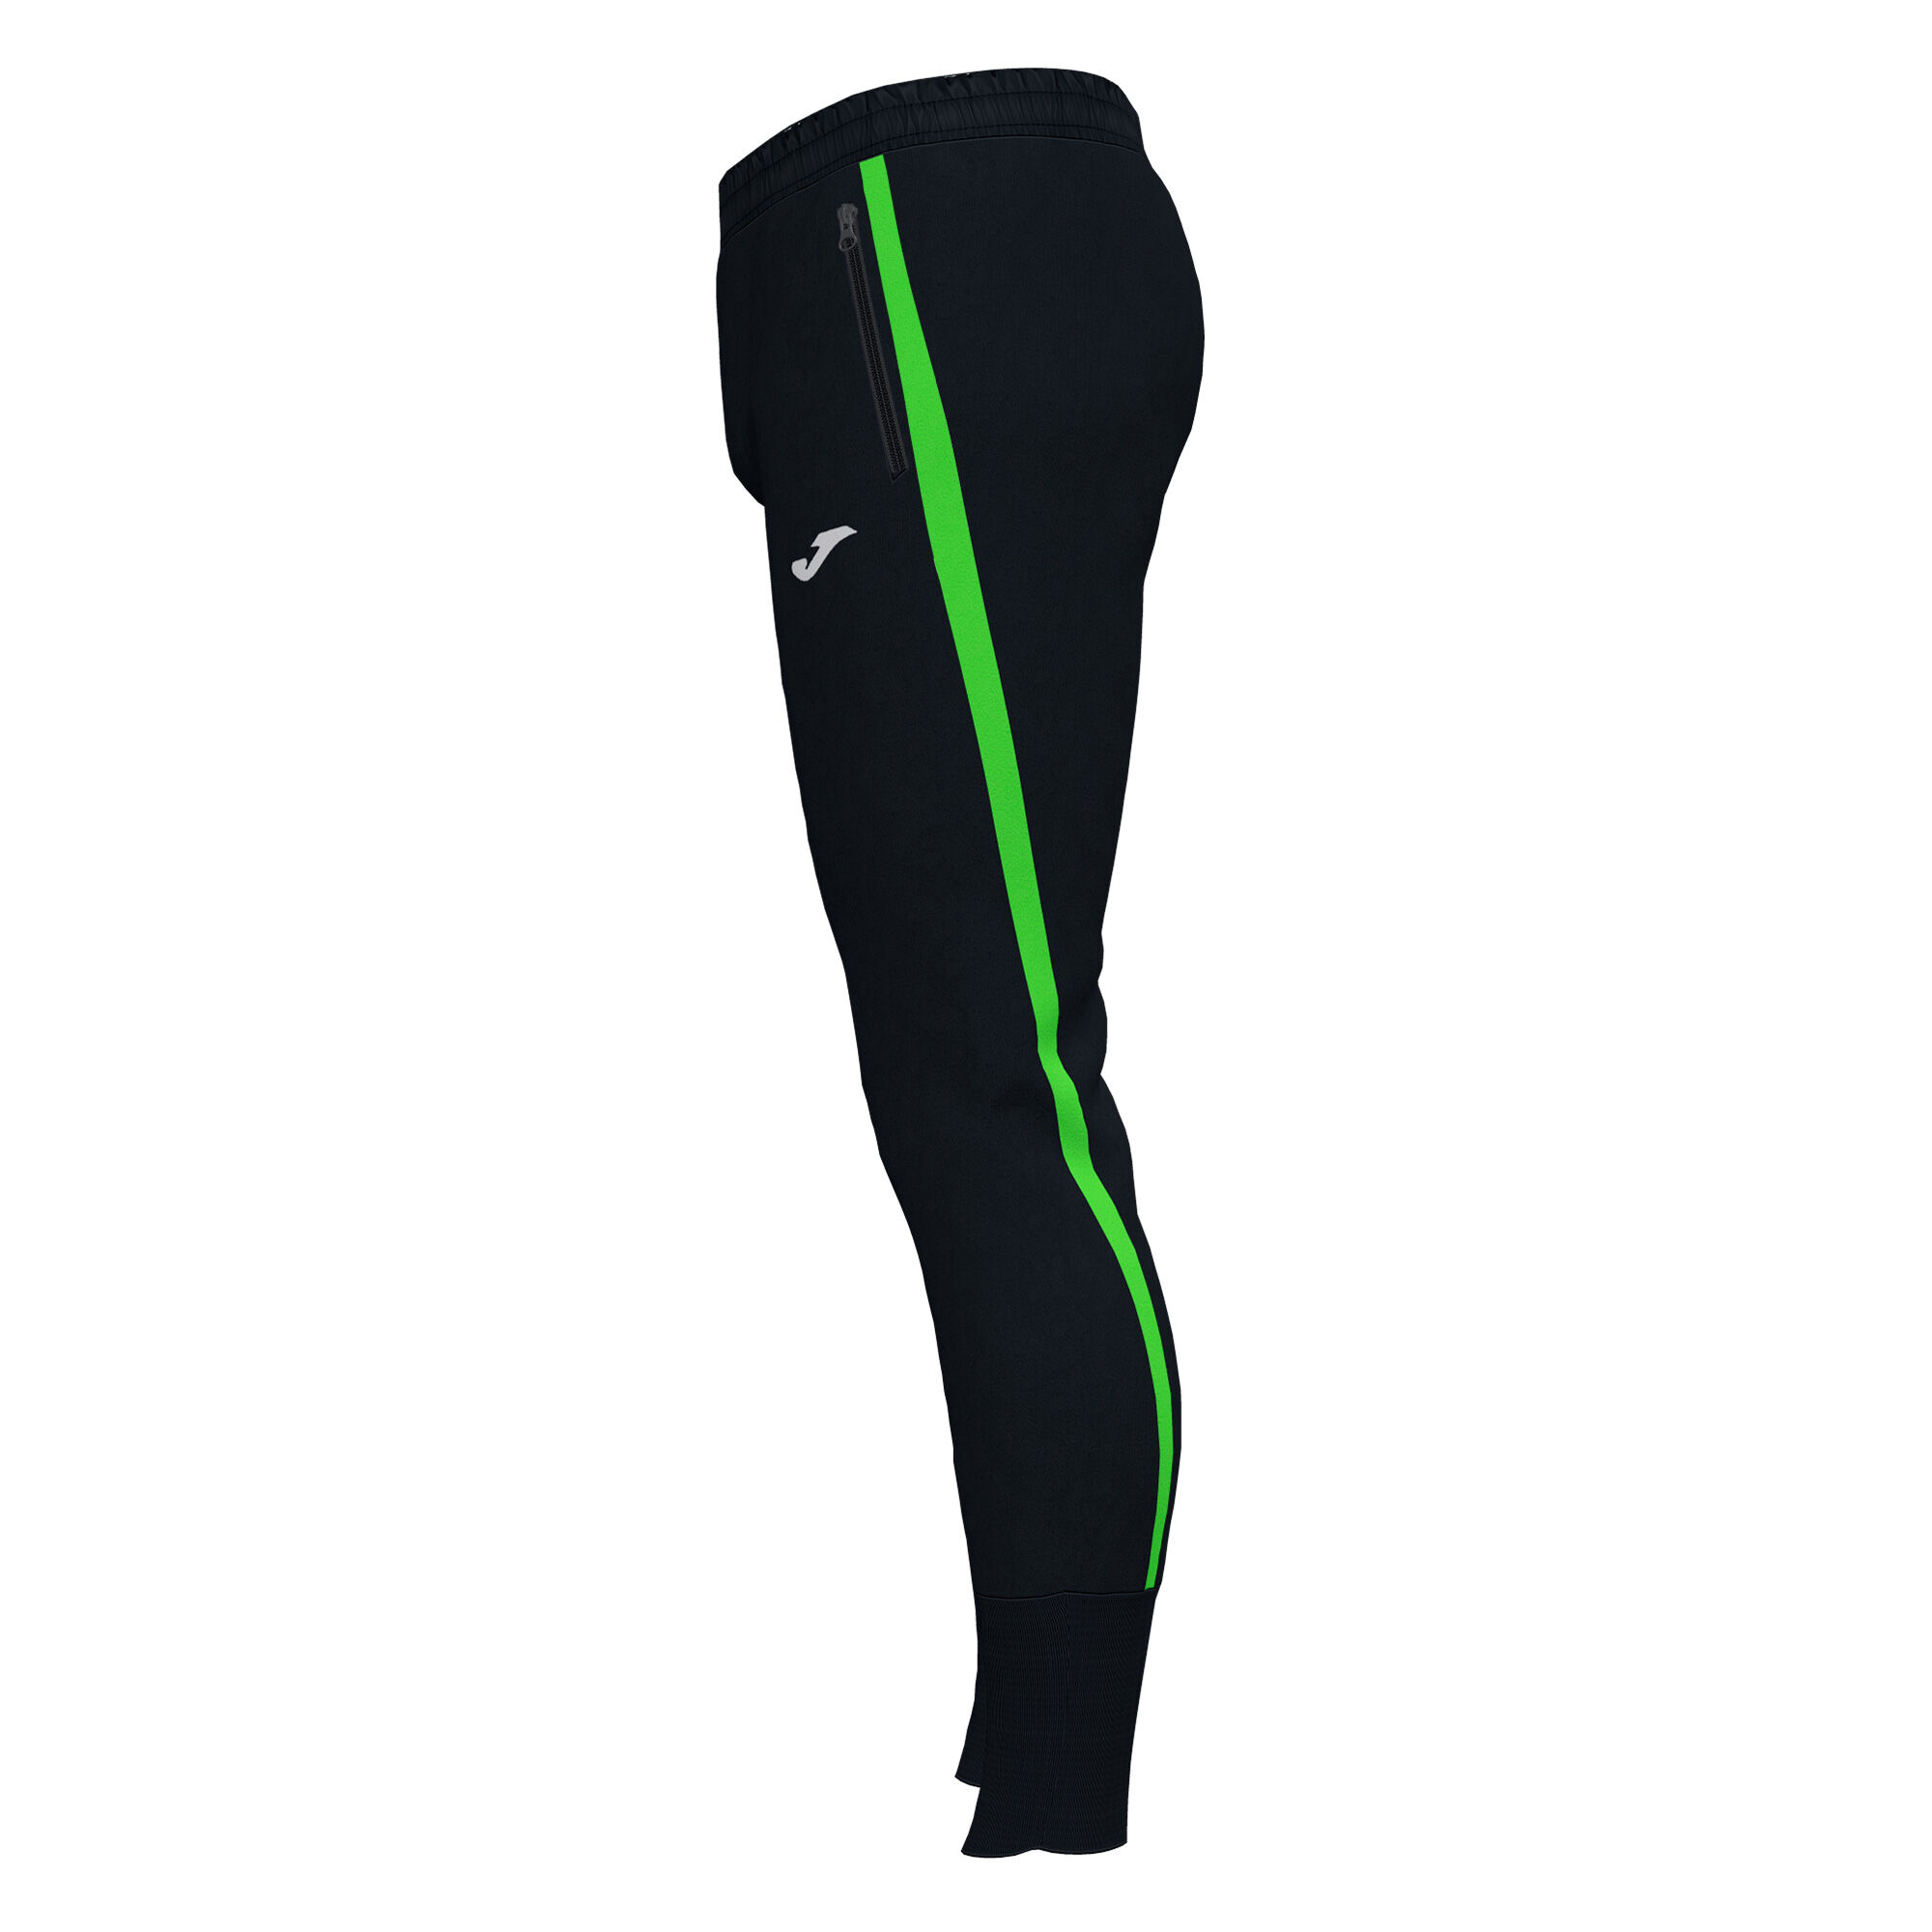 Longs pants man Advance black fluorescent green